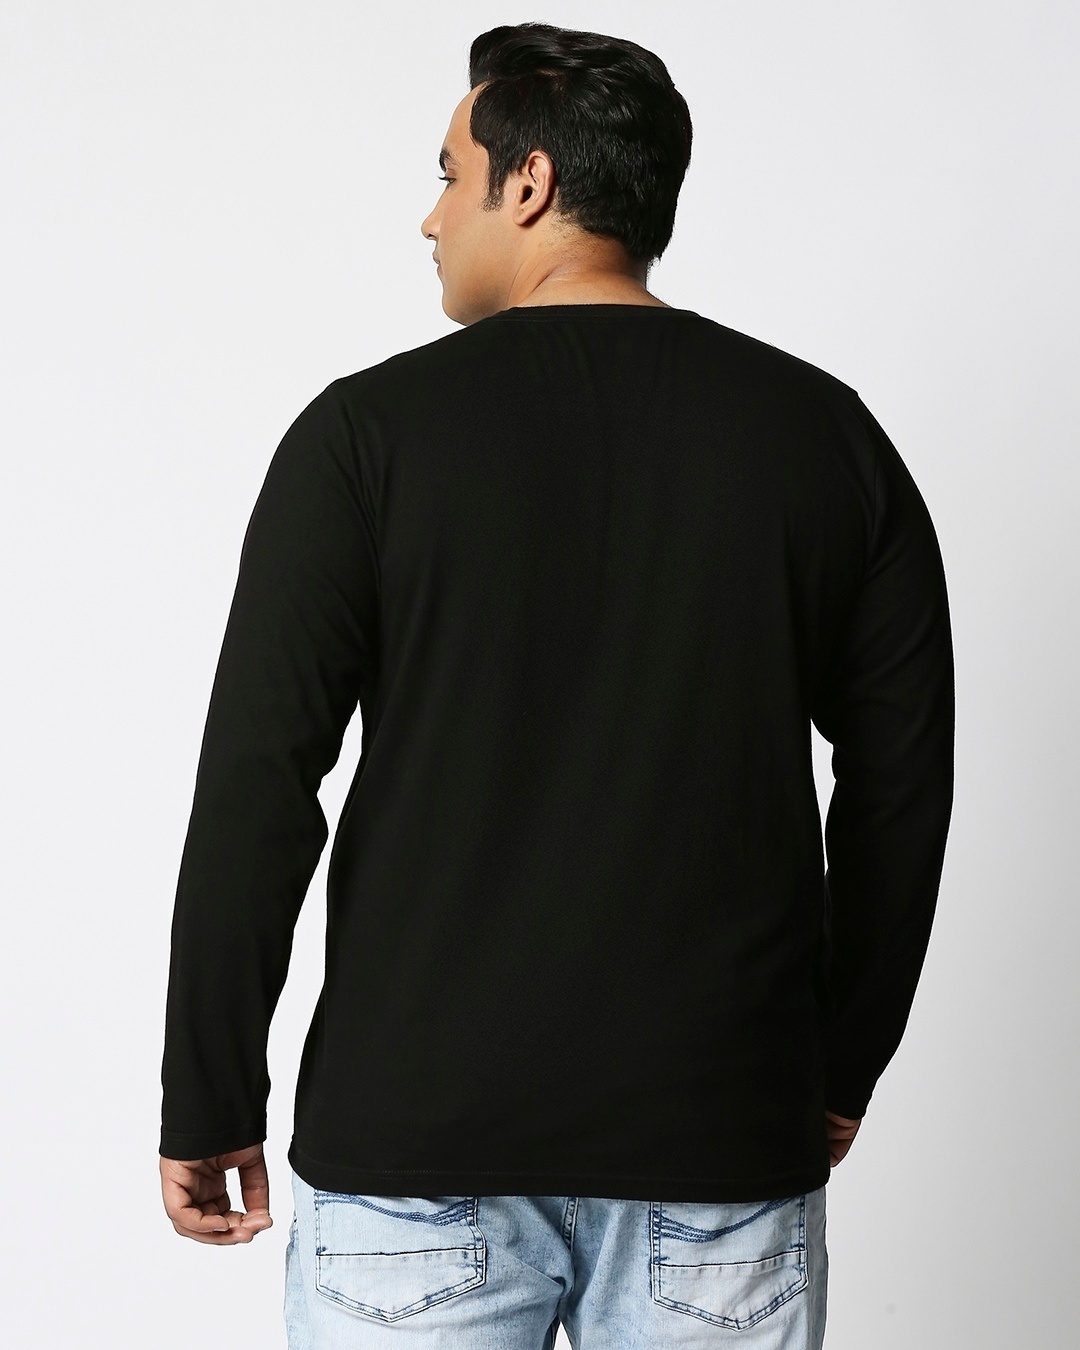 Shop Black Plus Size Full Sleeve T-Shirt-Design